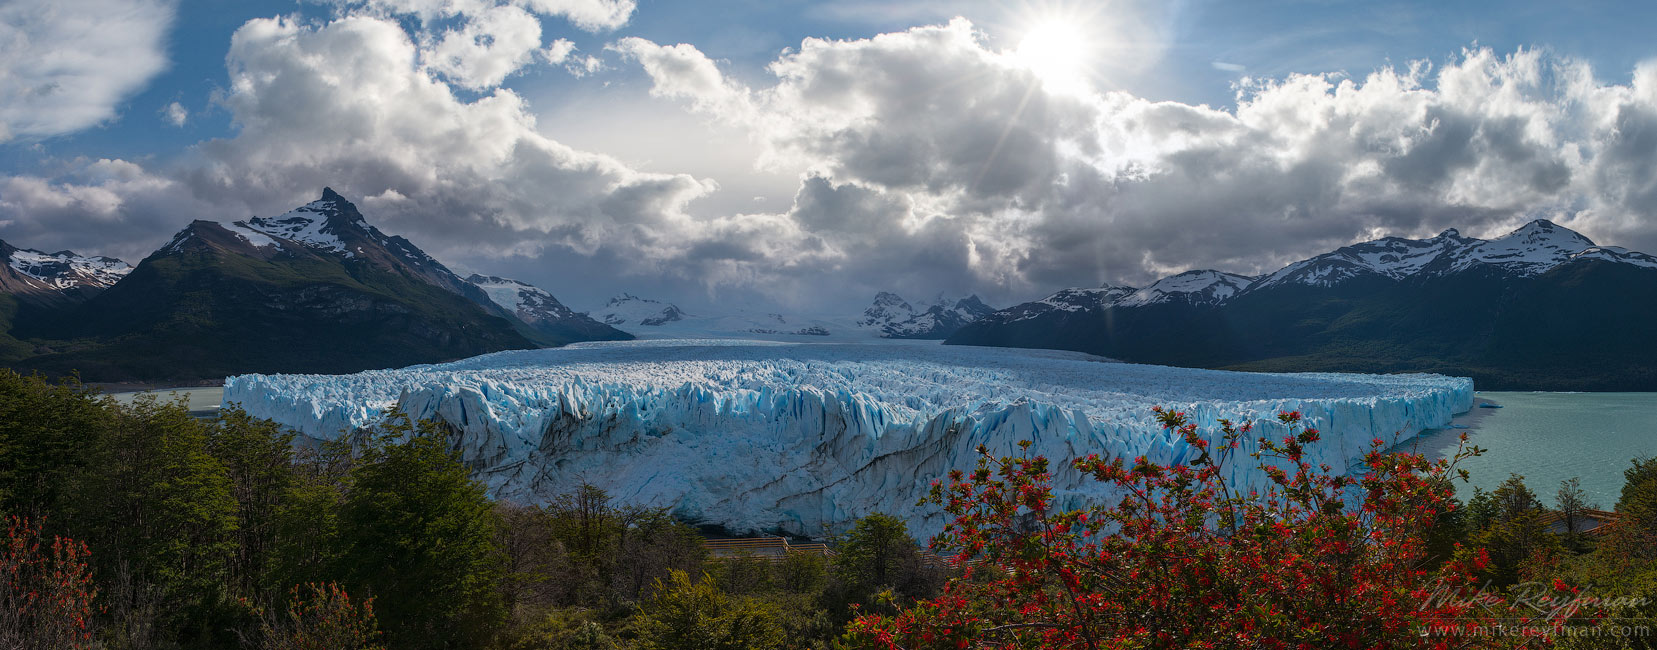 Panoramic view of Perito Moreno Glacier with Fire Bush on foreground. December 2013. Lago Argentino, Los Glaciares National Park, Patagonia, Argentina.